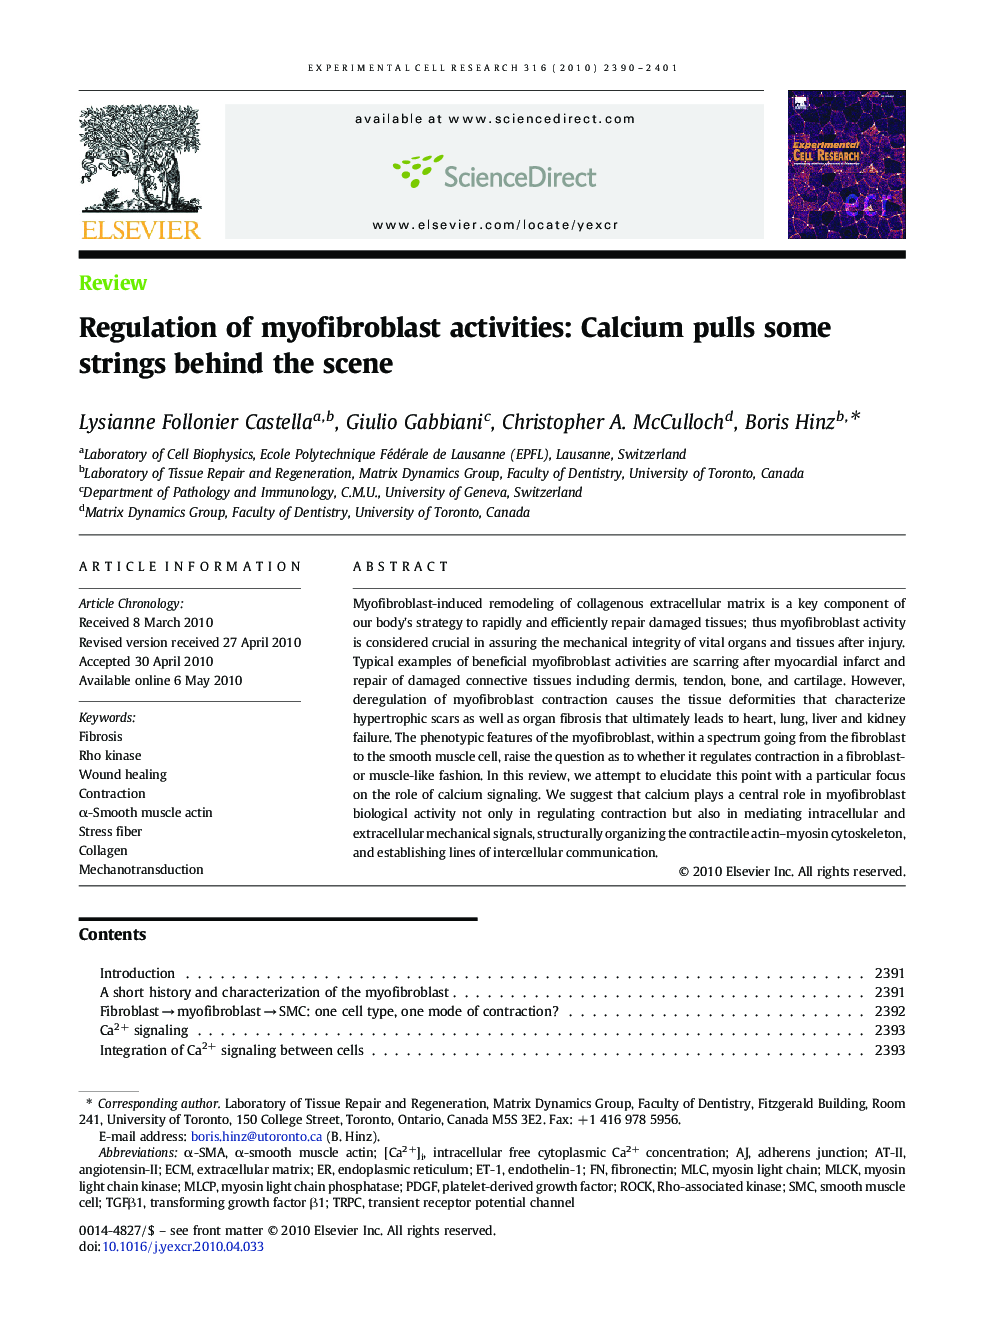 Regulation of myofibroblast activities: Calcium pulls some strings behind the scene